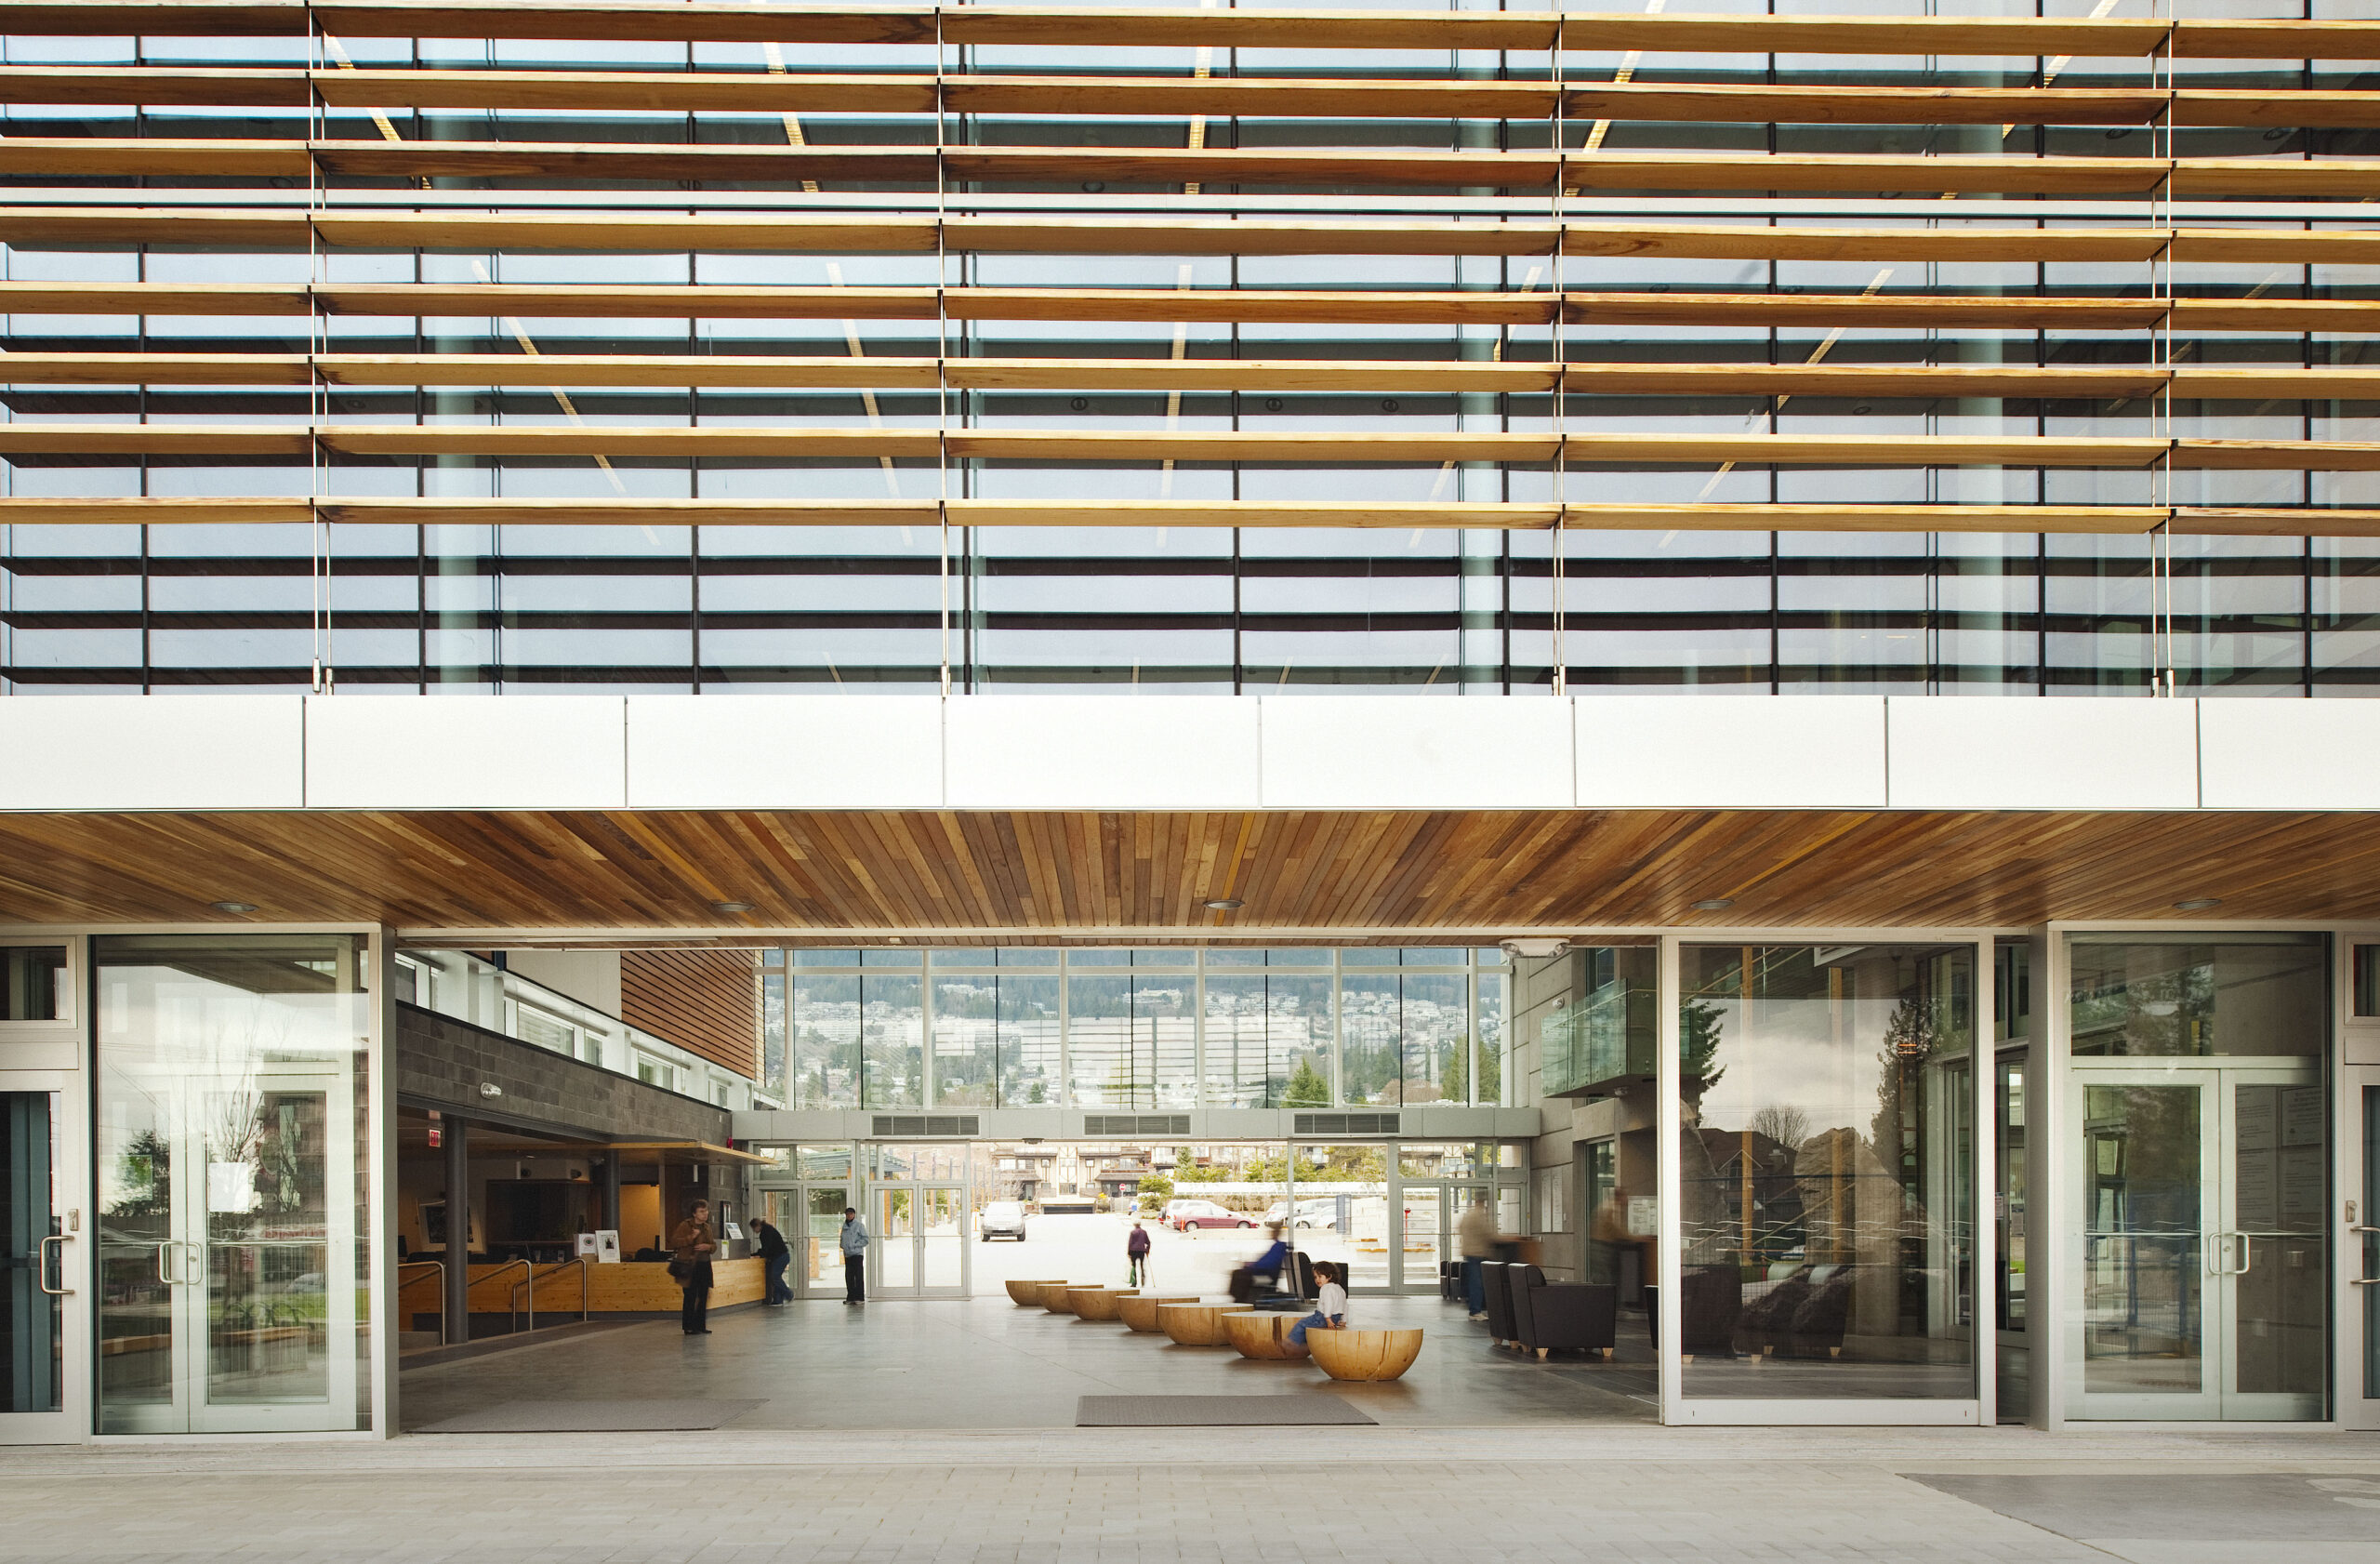 View through open doors into the West Vancouver Aquatic & Community Centre atrium.